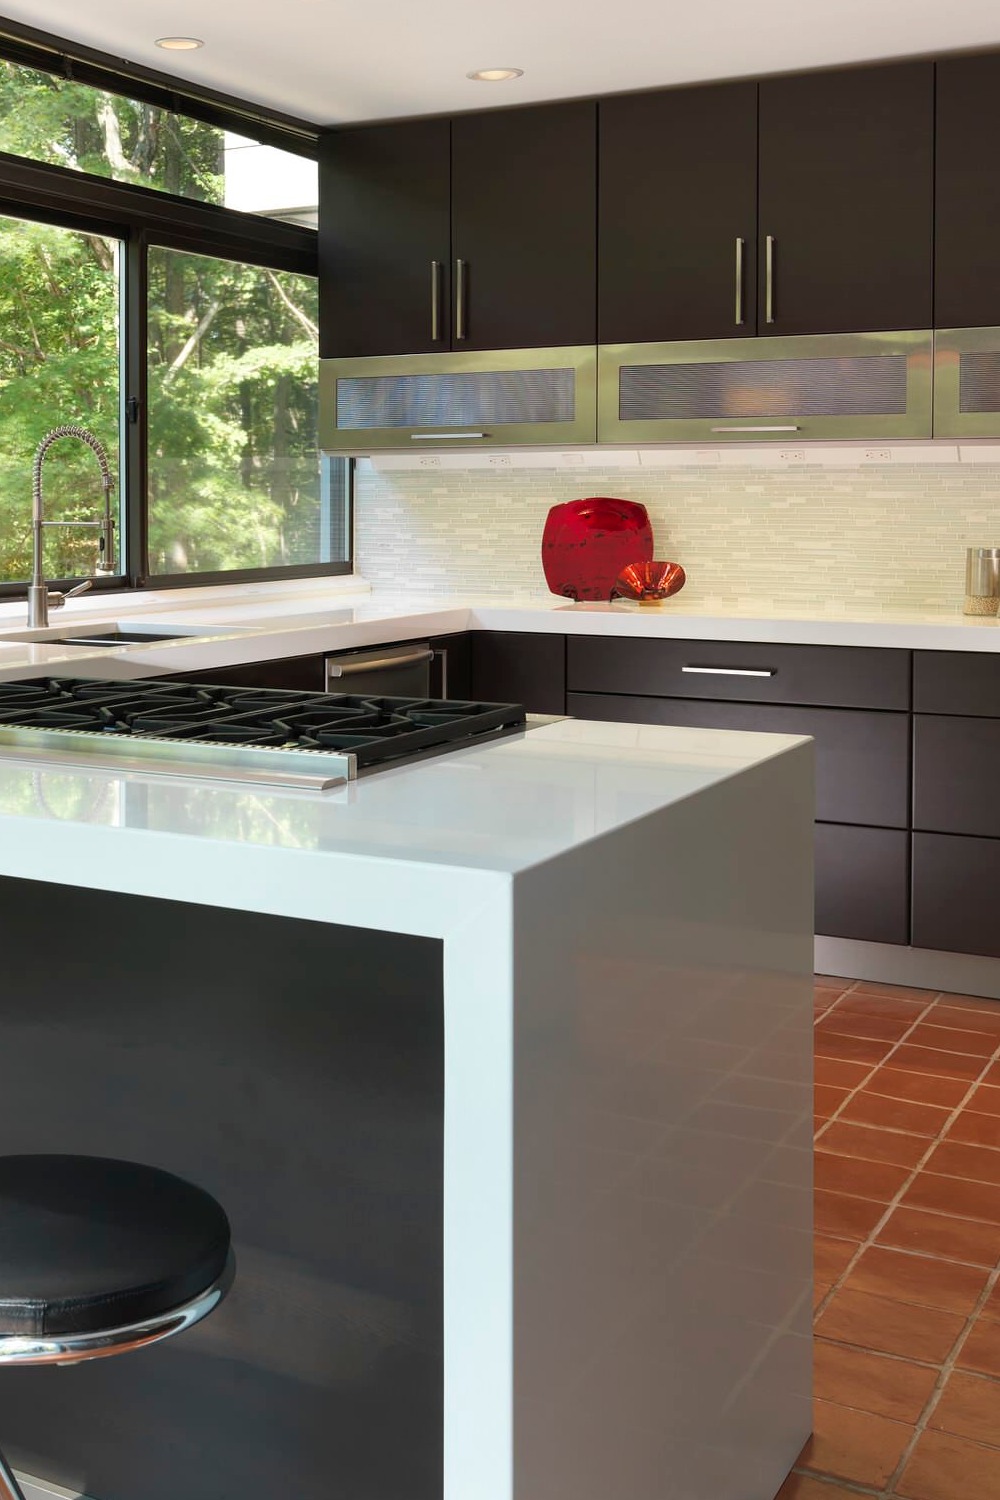 Flat Panel Charcoal Gray Cabinets White Quartz Countertops Cream Matchstick Tile Backsplash Terra Cotta Floor